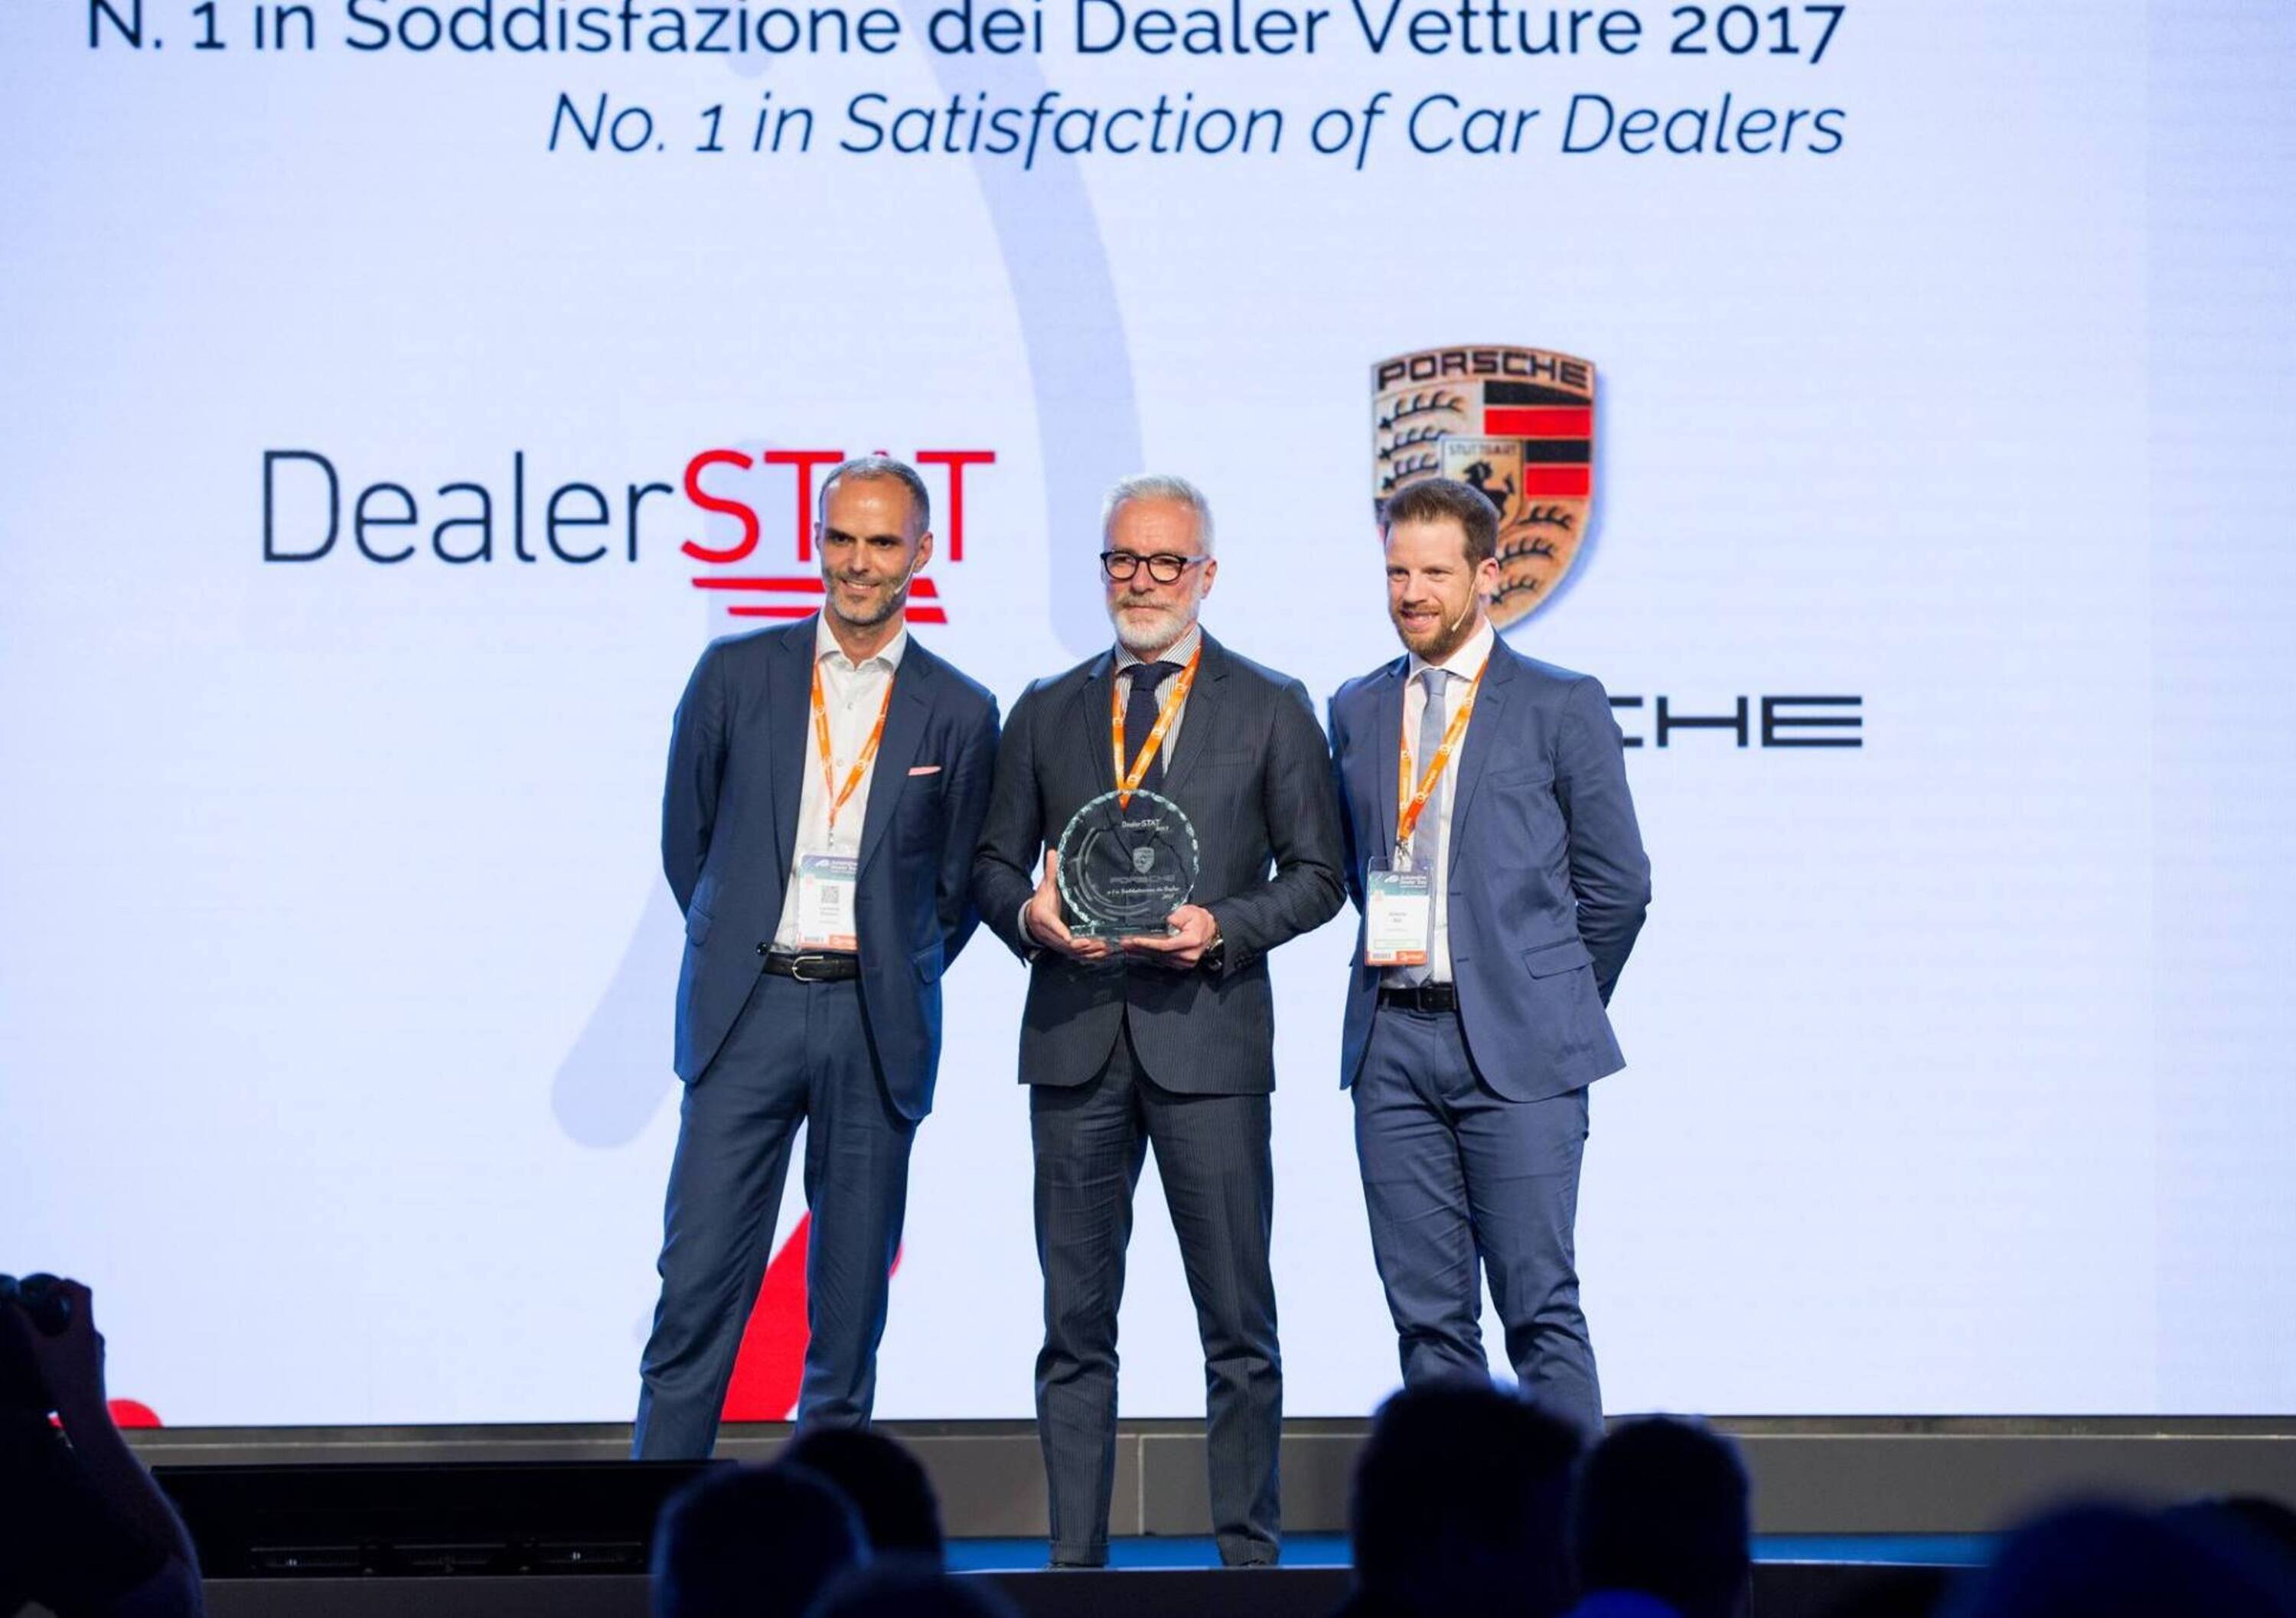 ADD XV, Risultati DealerSTAT 2017: premiate Porsche, Volkswagen e Ford 